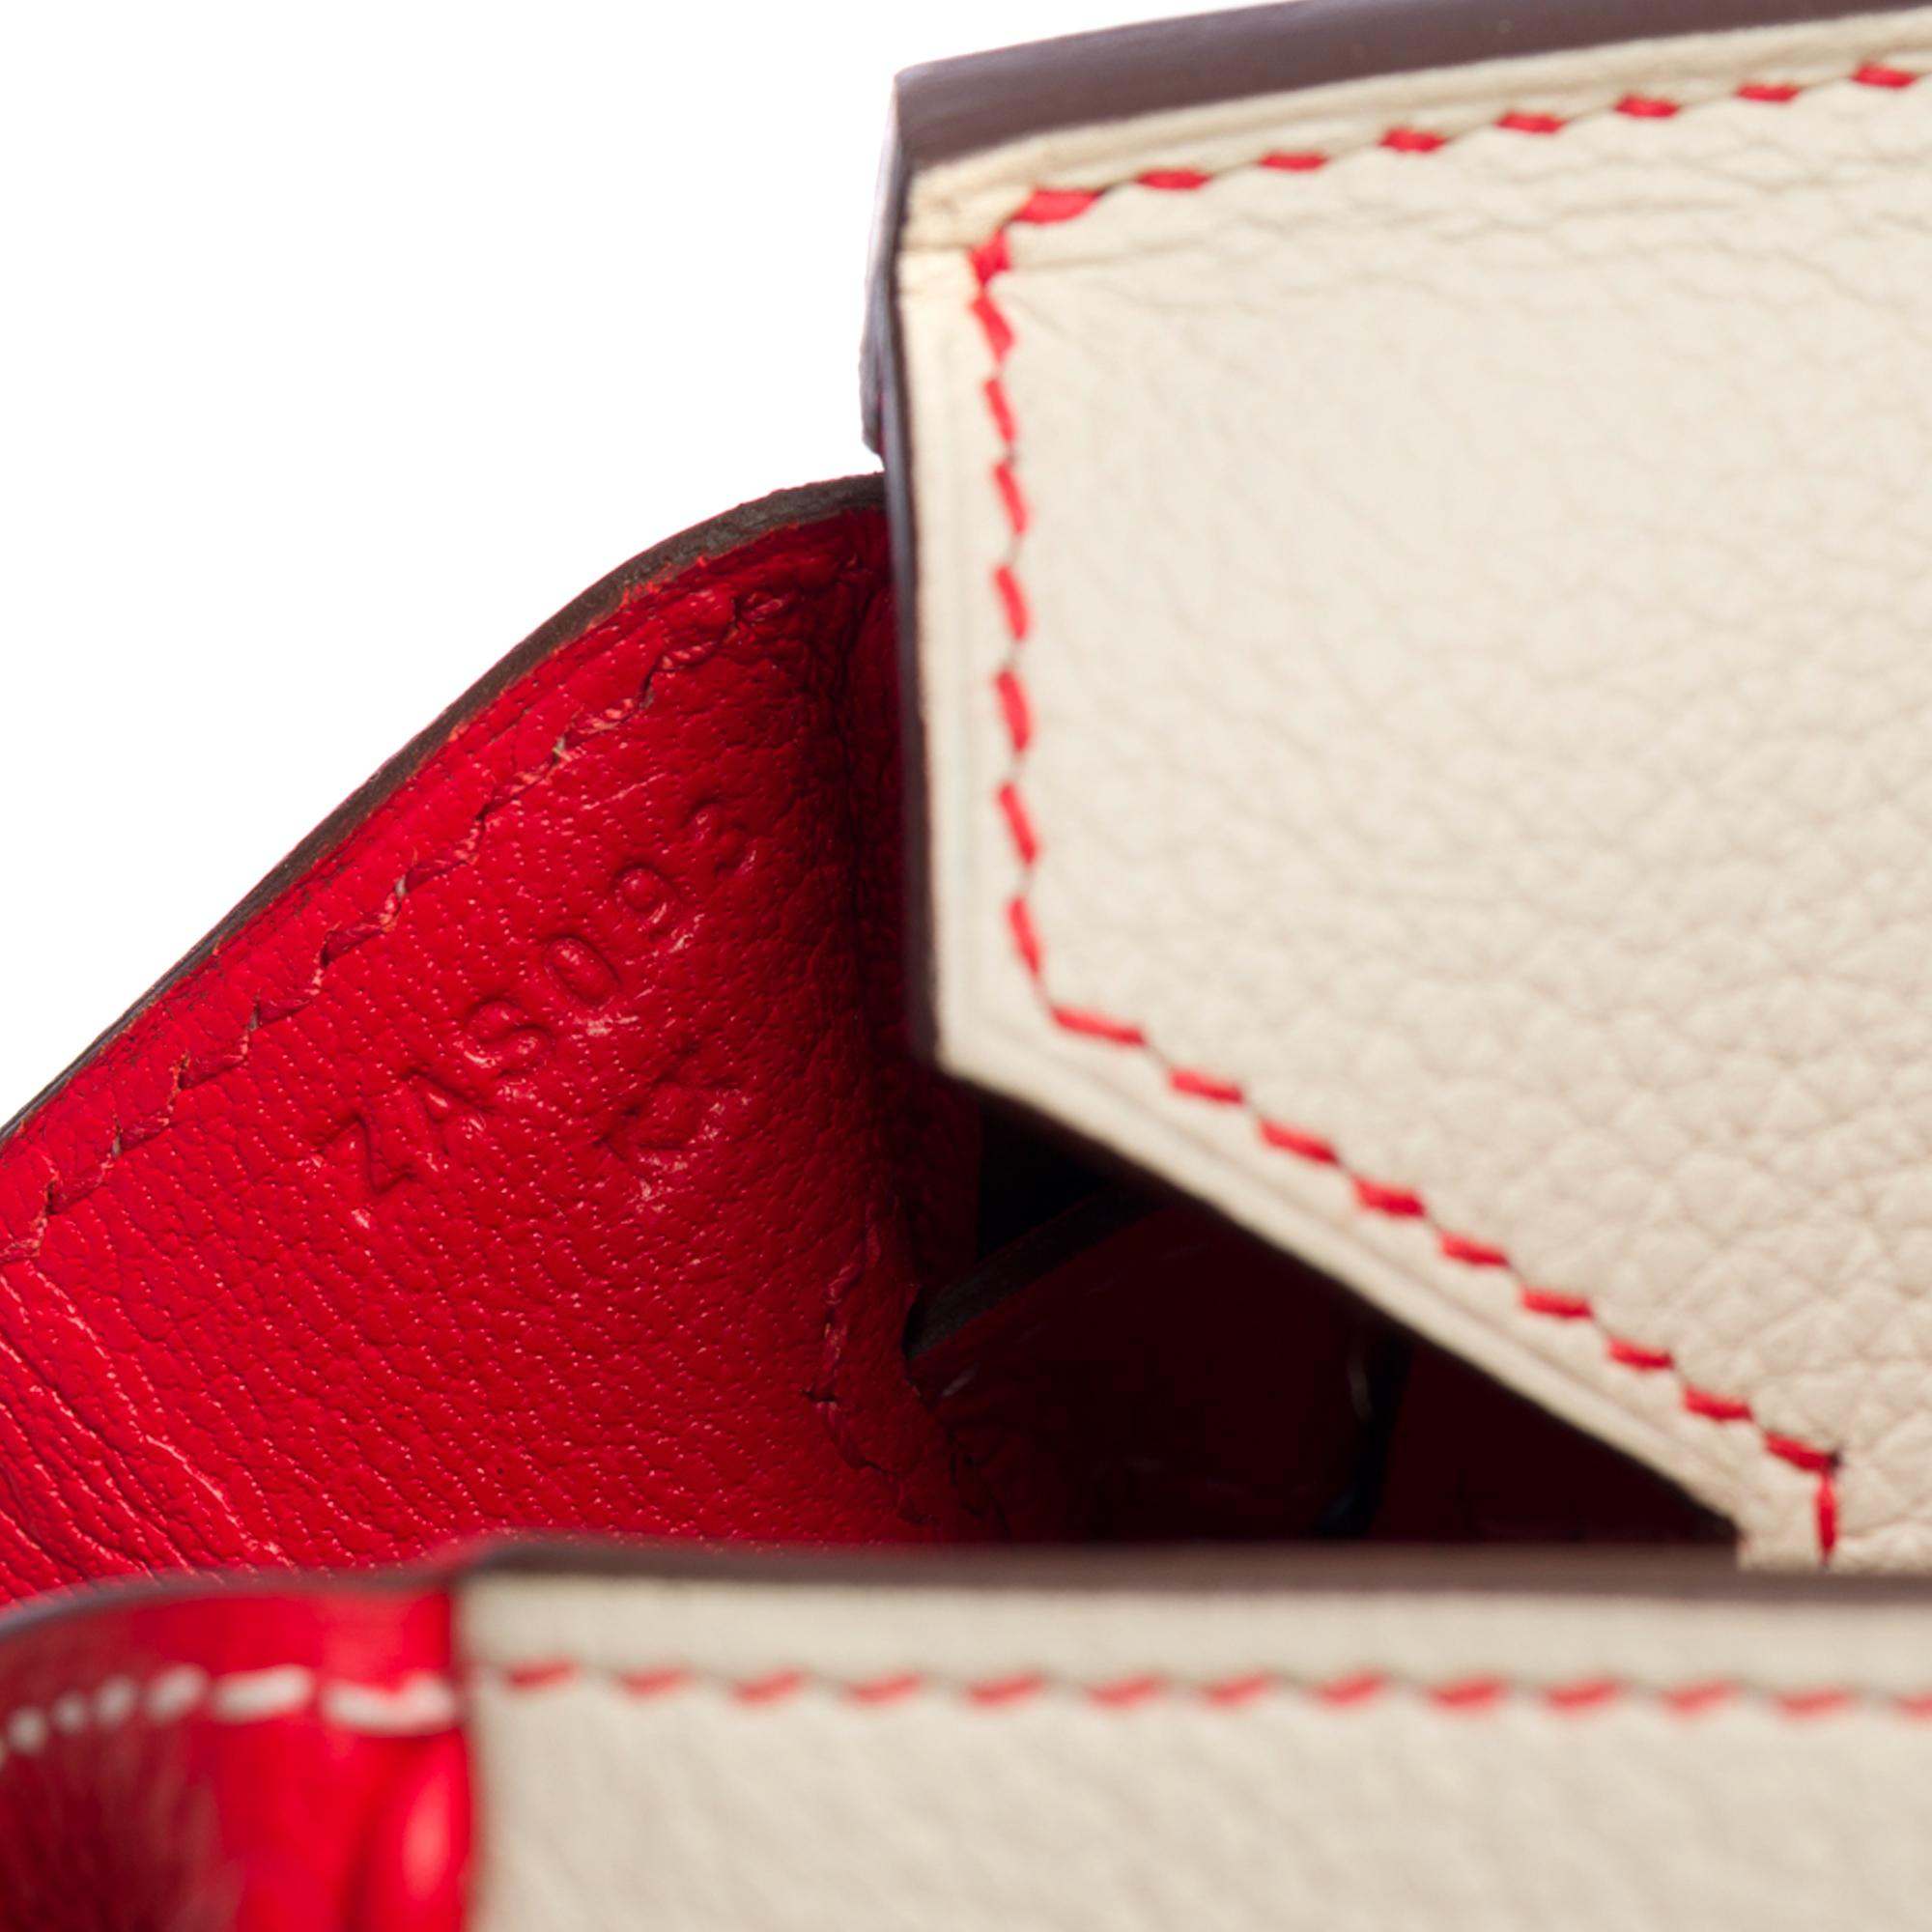  Hermès Birkin 30 HSS Special Order handbag in Craie/Red Togo leather, PHW 2